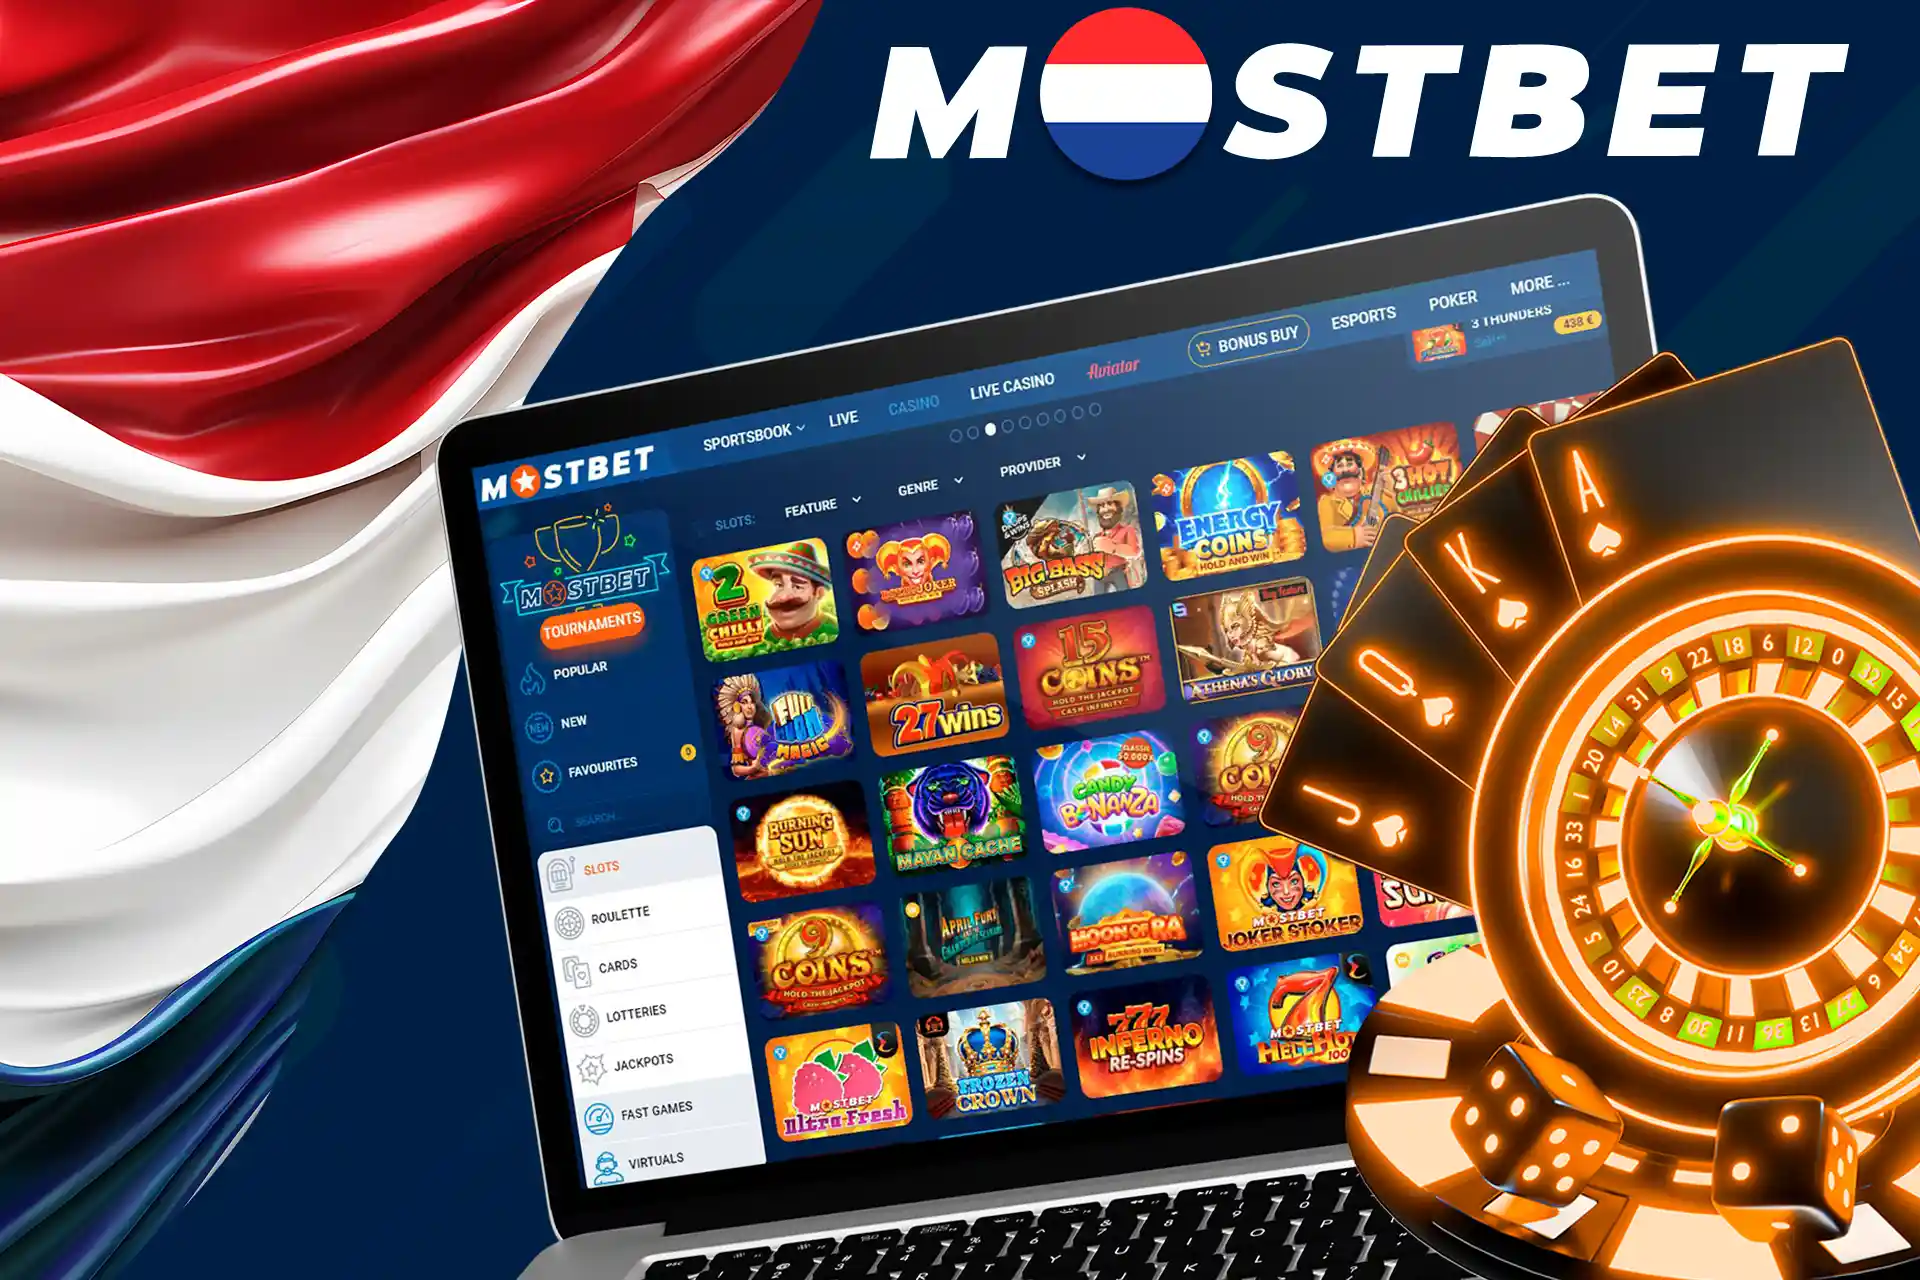 Large selection of gambling games at Mostbet Casino